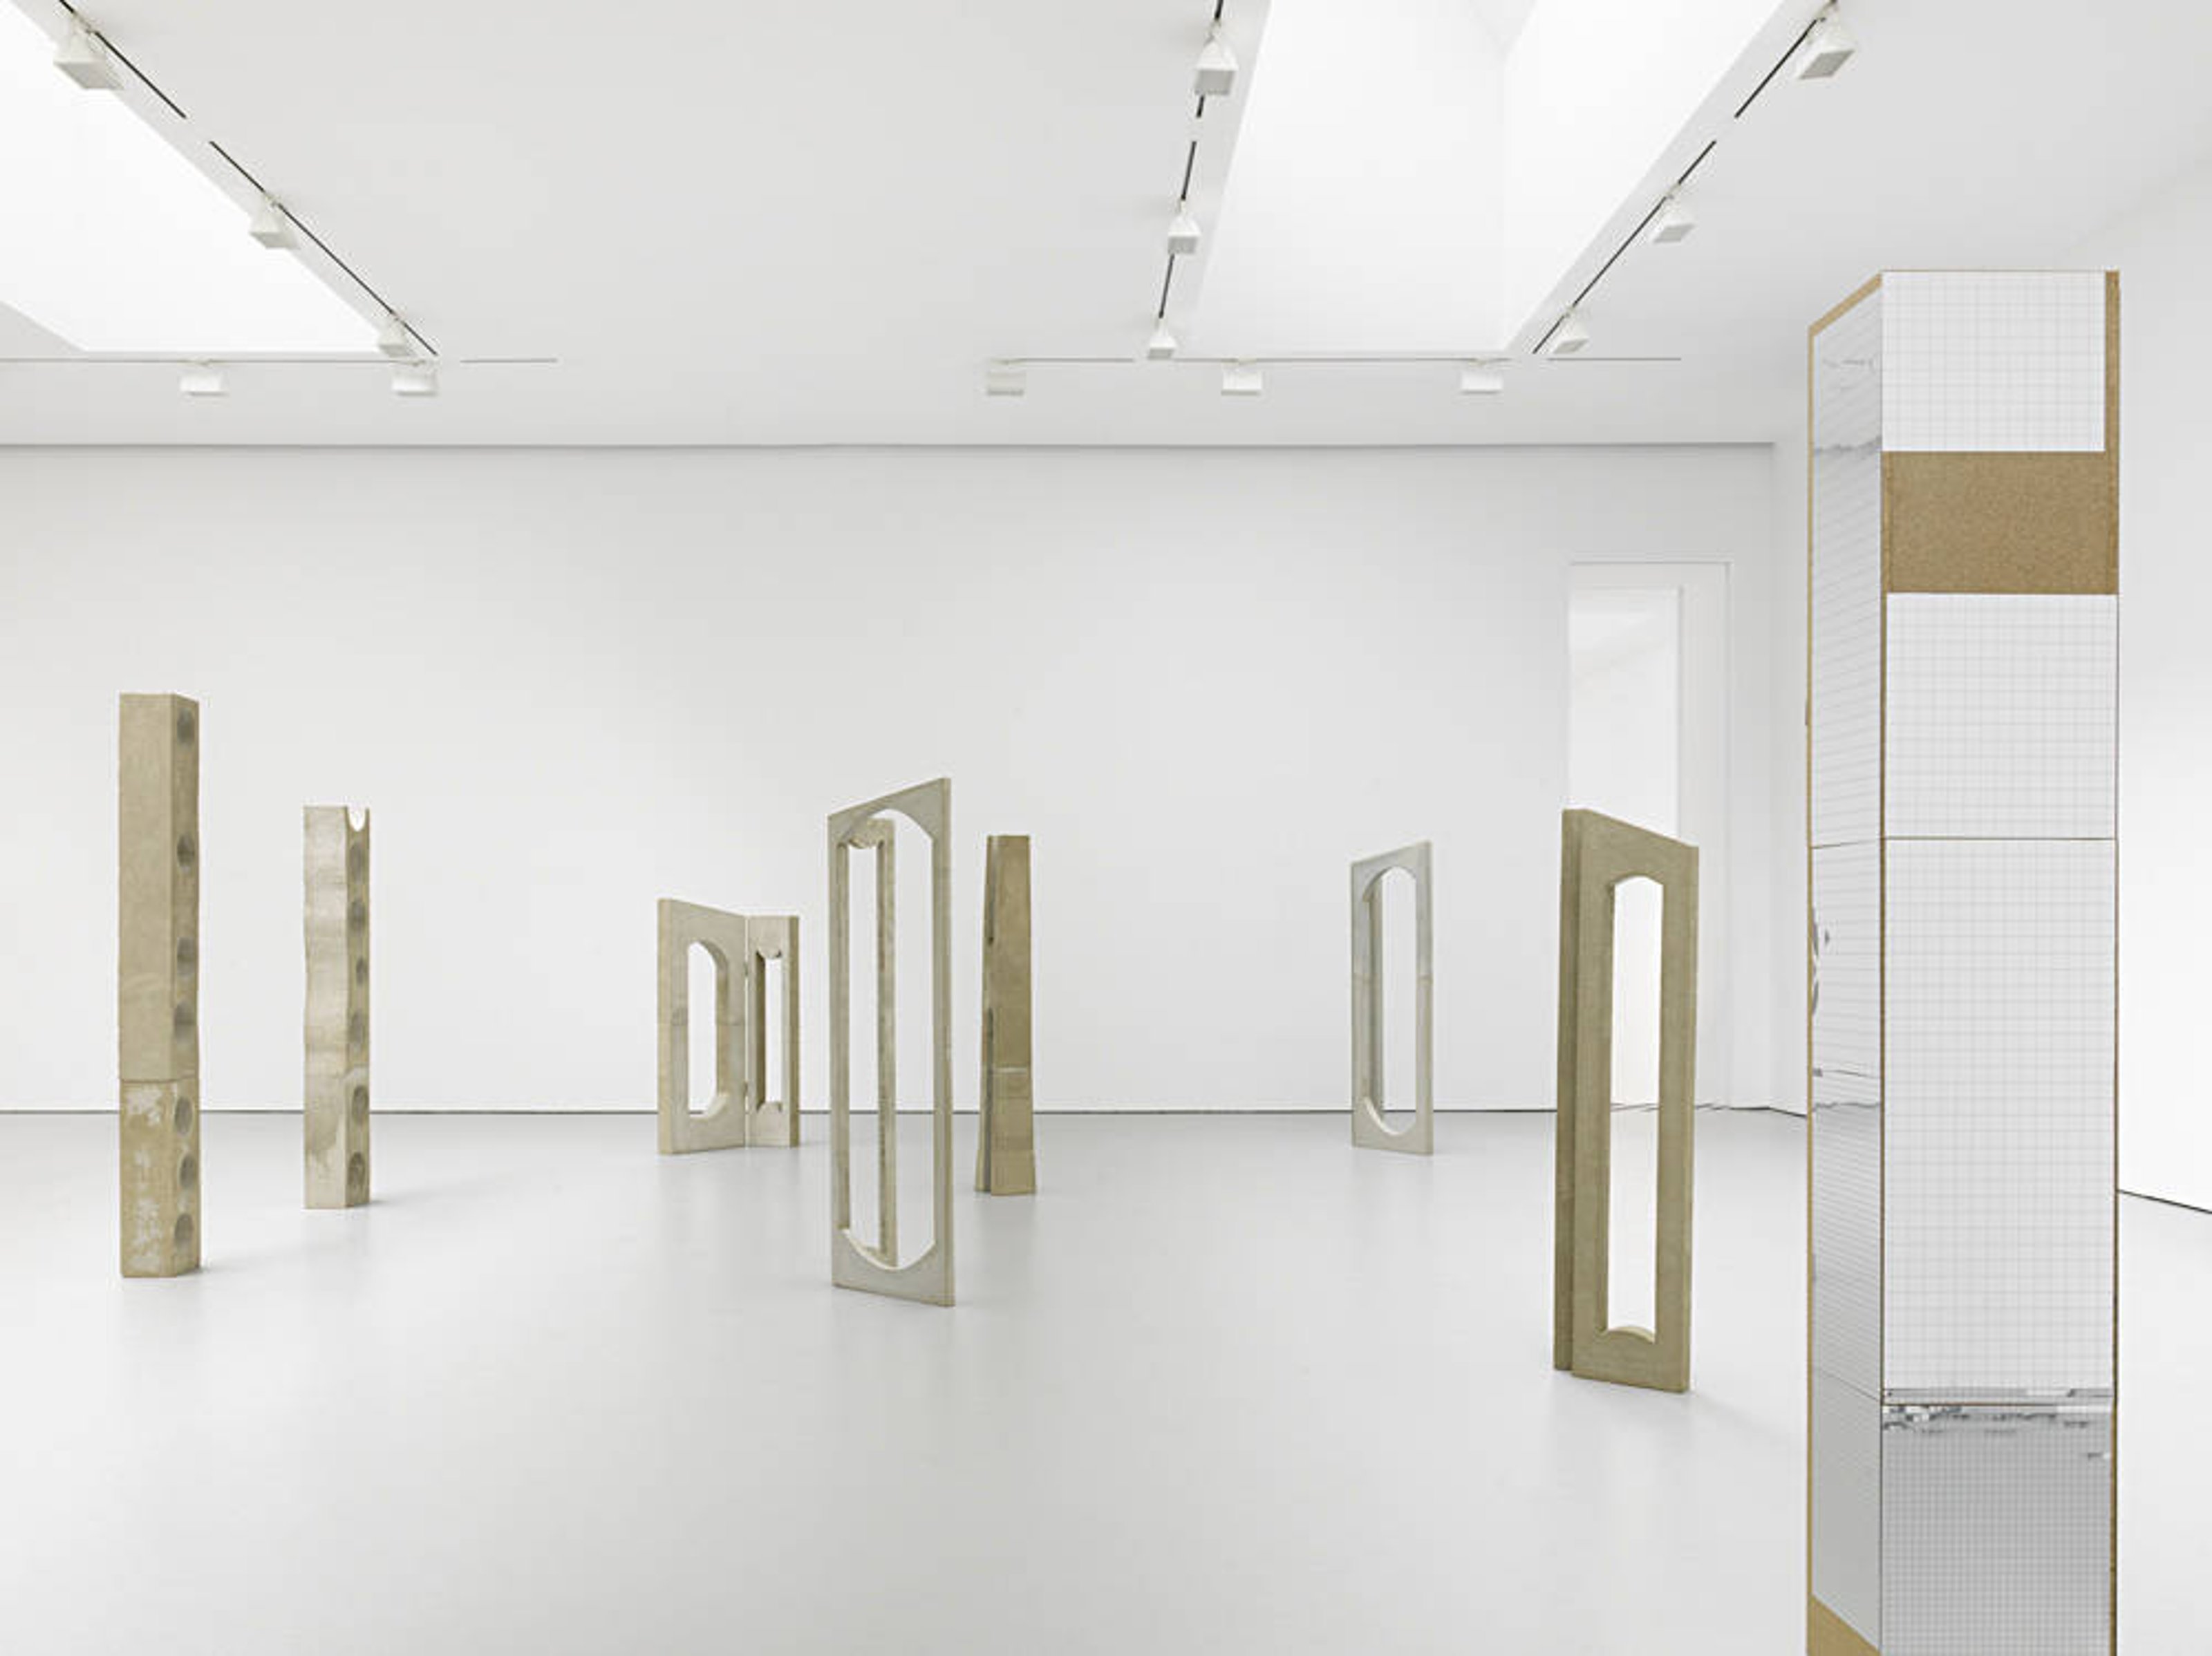 Mirrored reflective column alongside other sculptures by Isa Genzken